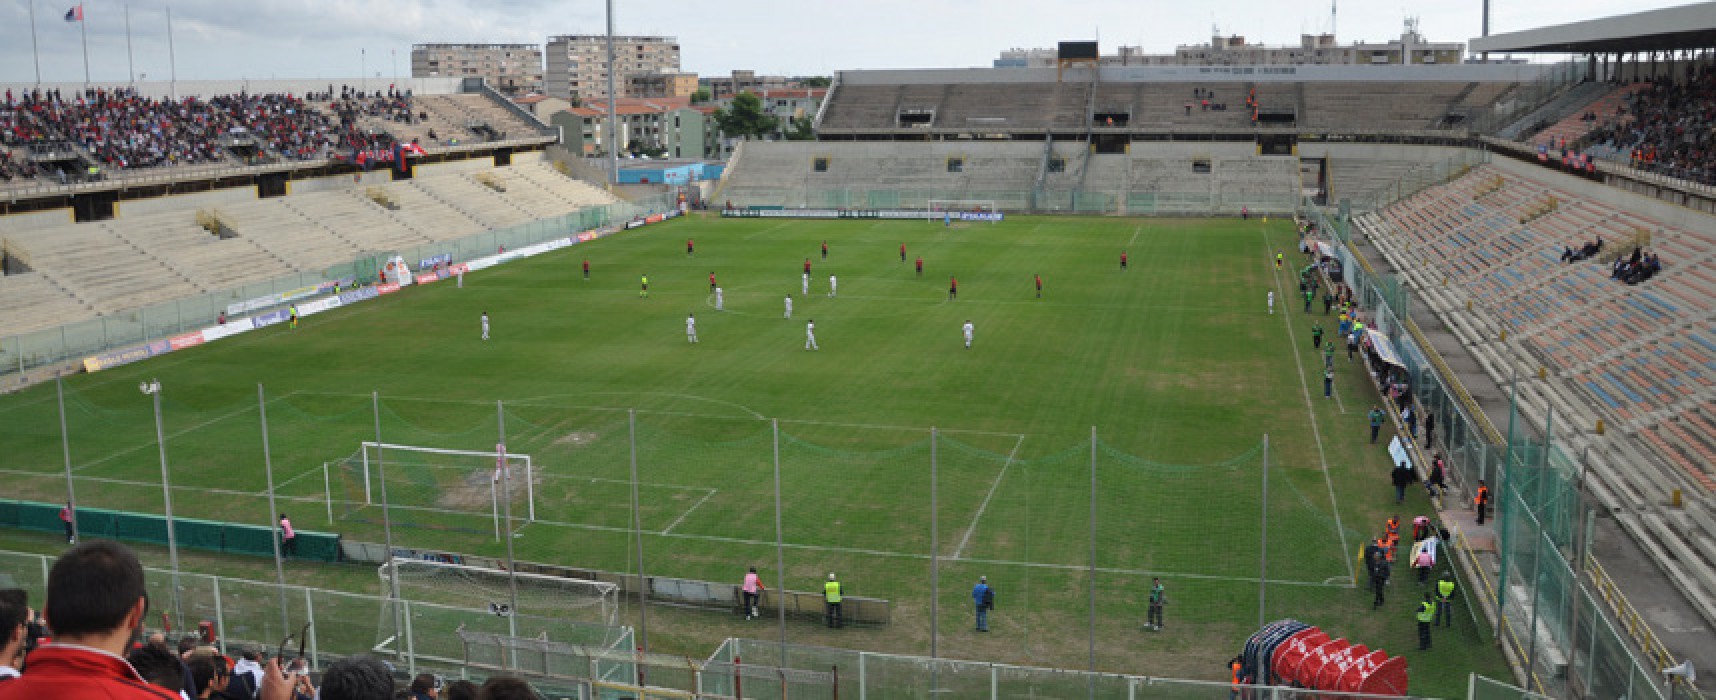 Taranto-Bisceglie, trasferta vietata ai tifosi neroazzurri